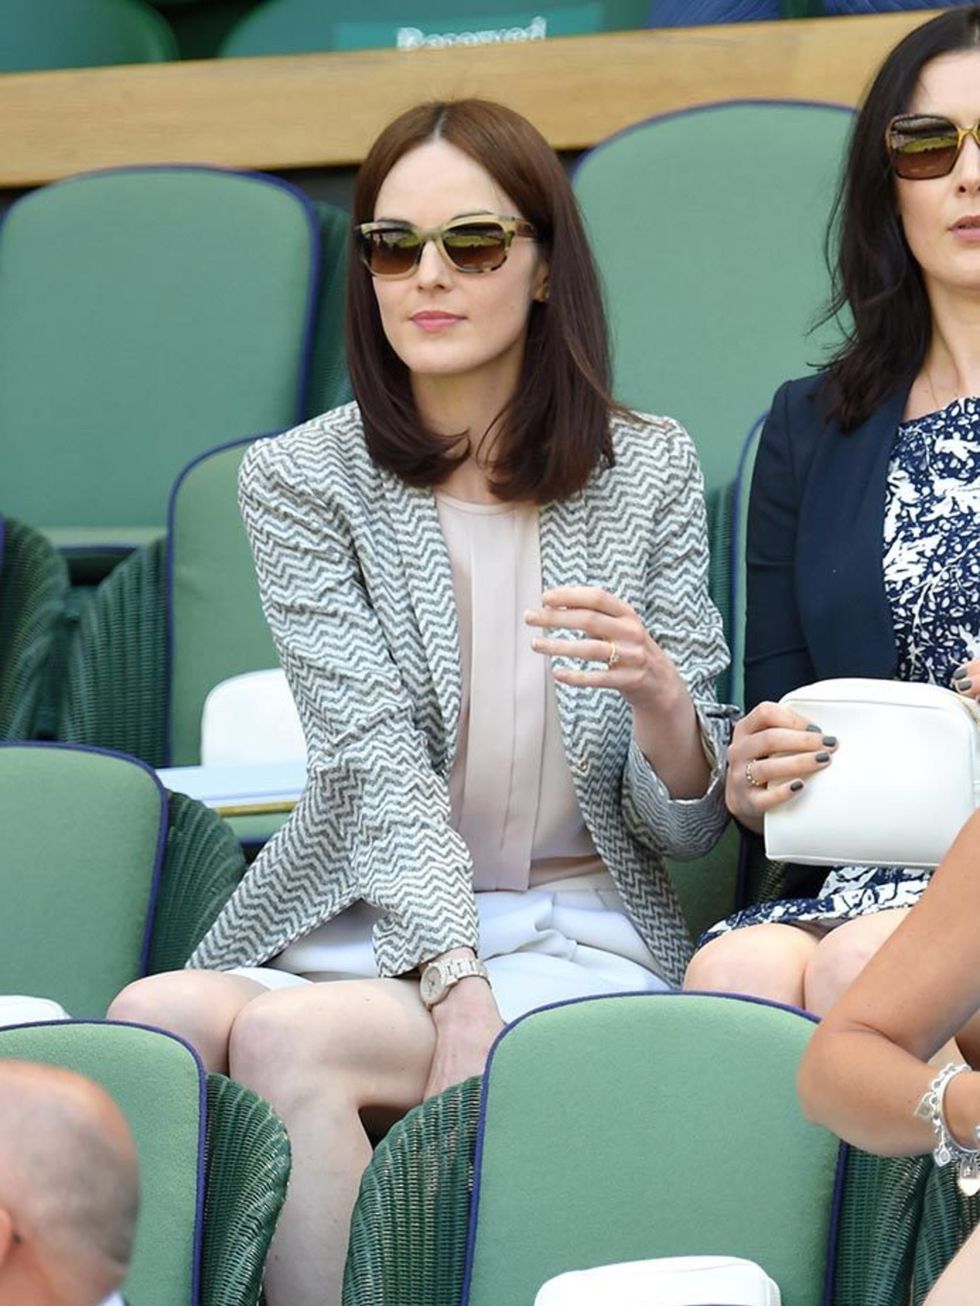 Michelle Dockery at Wimbledon 2015 in London.